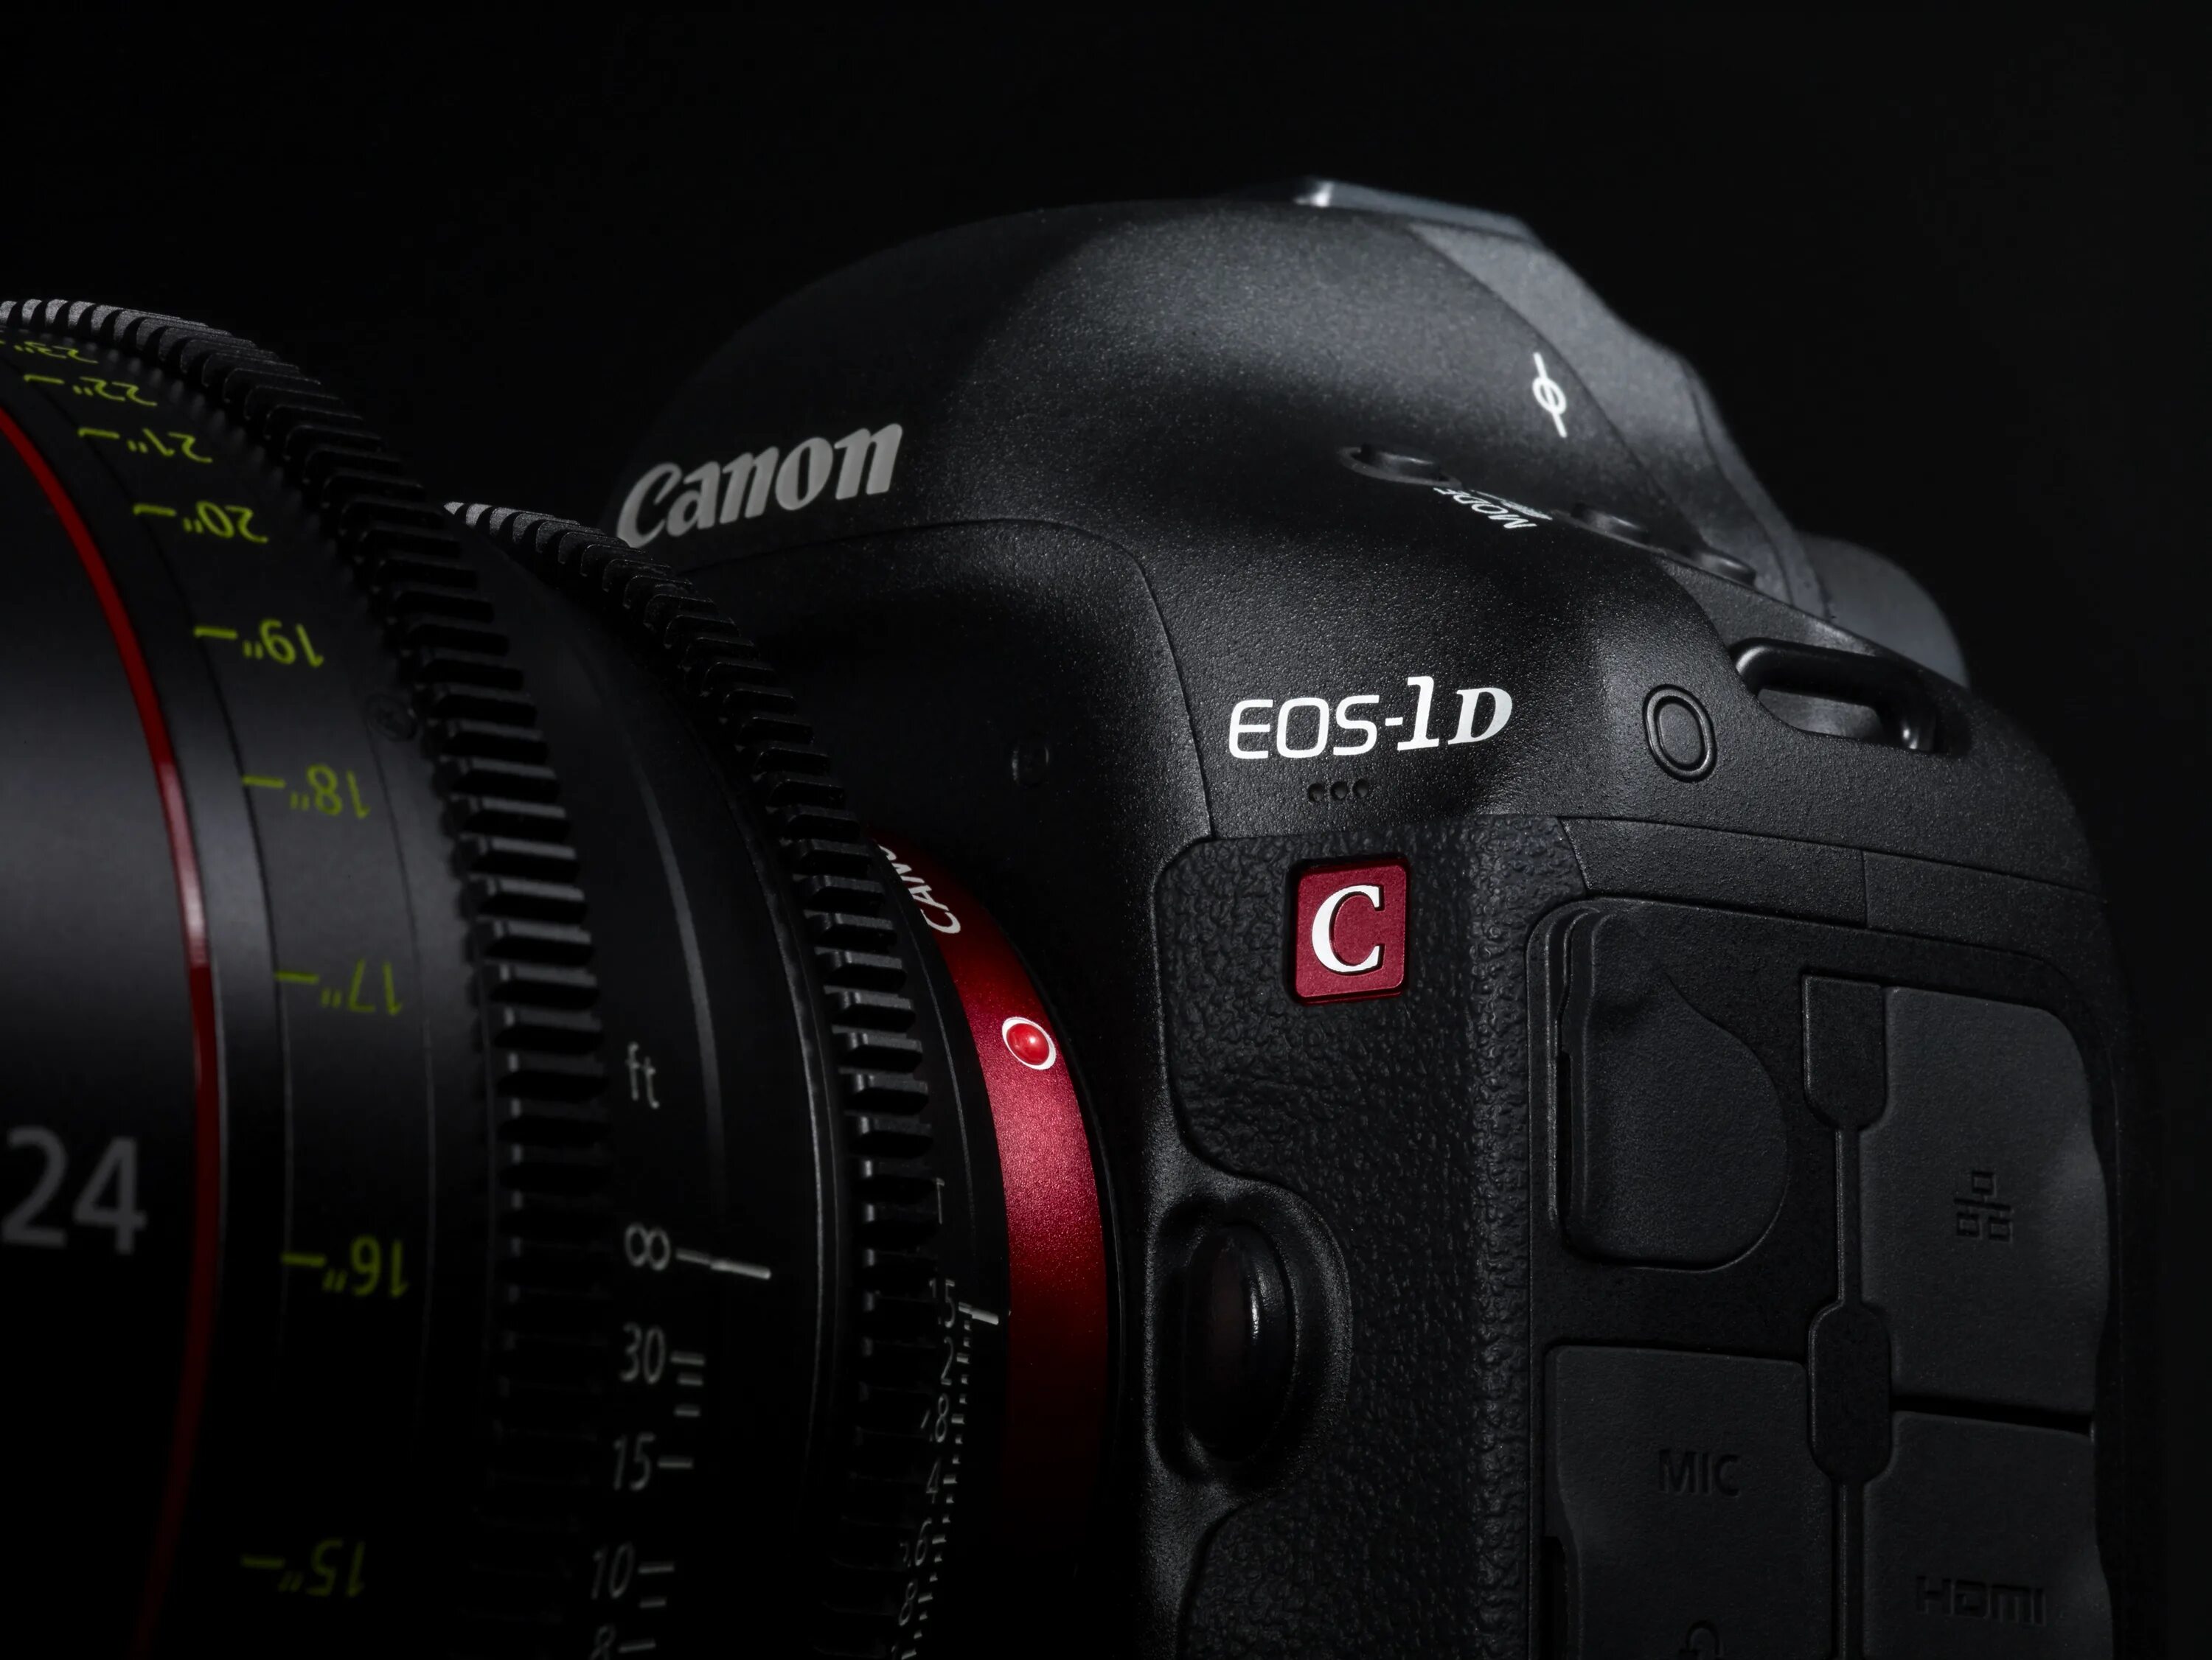 C d2 5. Canon EOS-1d c. Canon EOS-1d x. Фотоаппарат Canon EOS 1d c body. Canon EOS c500 4k Cinema Camera.